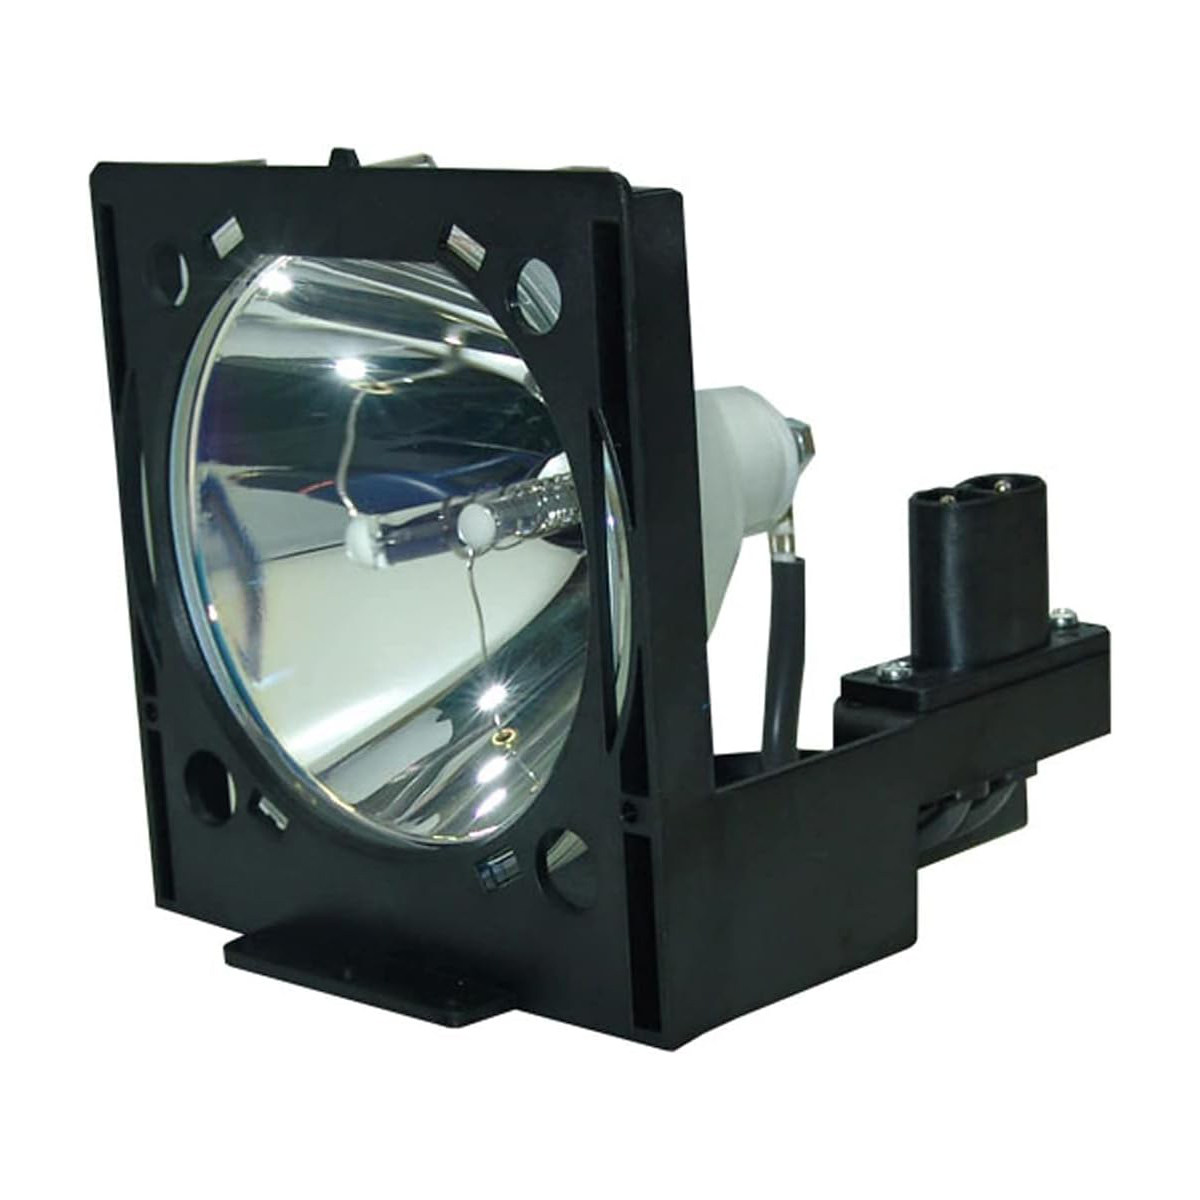 Replacement Projector lamp POA-LMP14 For Sanyo PLC-8800 PLC-8805 PL C-8810N